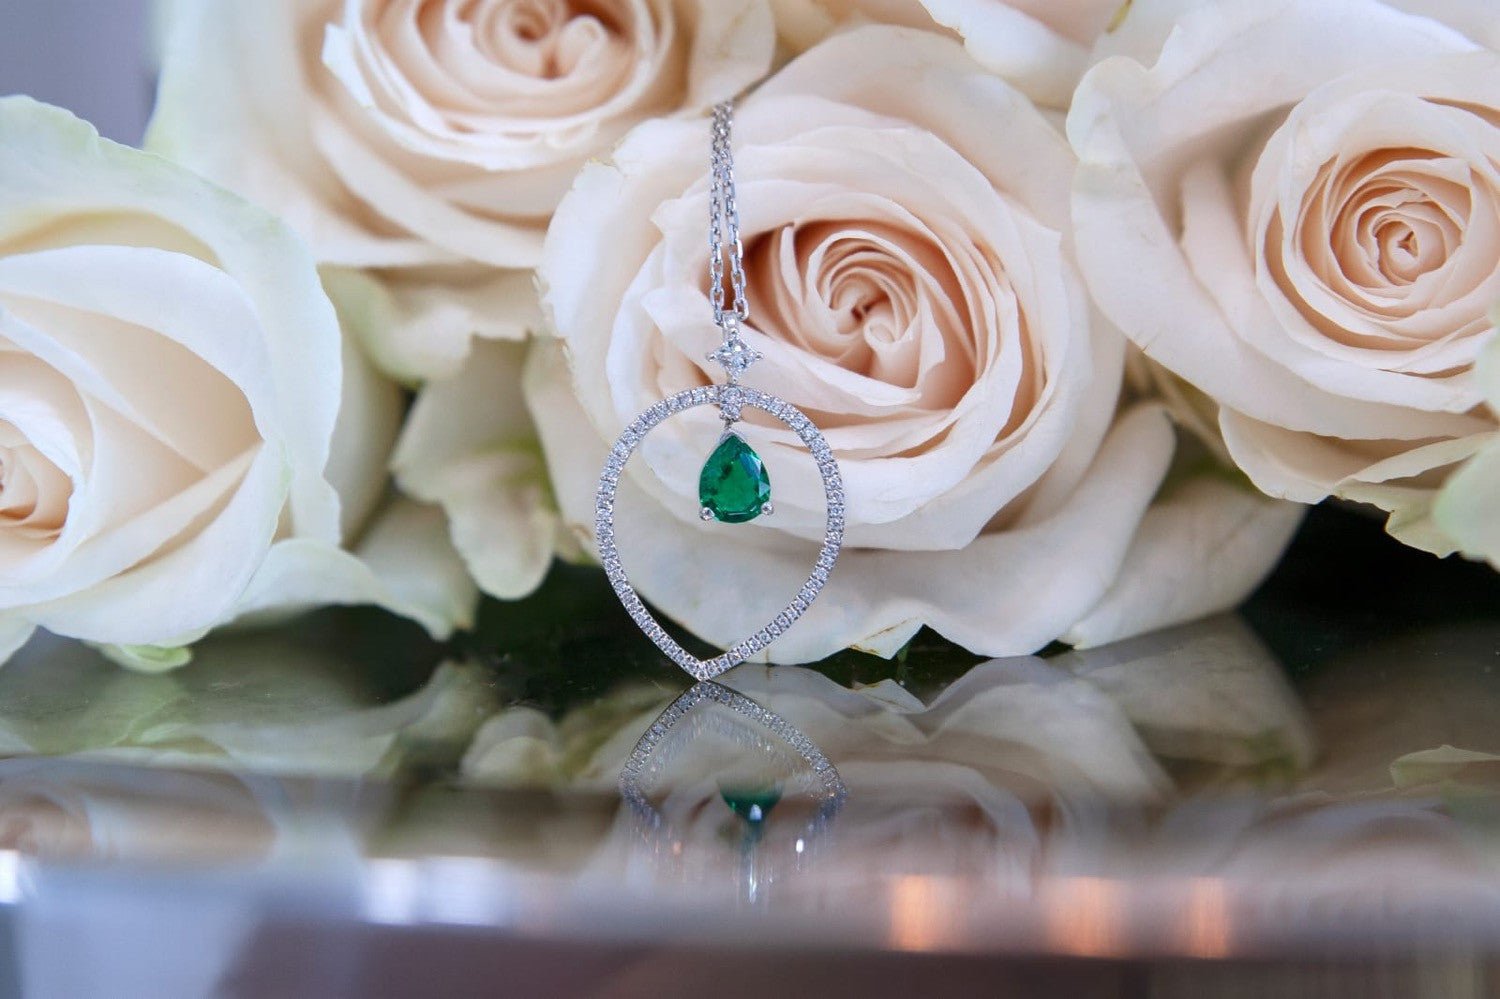 Heart shaped Emerald and Diamond Pendant - ForeverJewels Design Studio 8